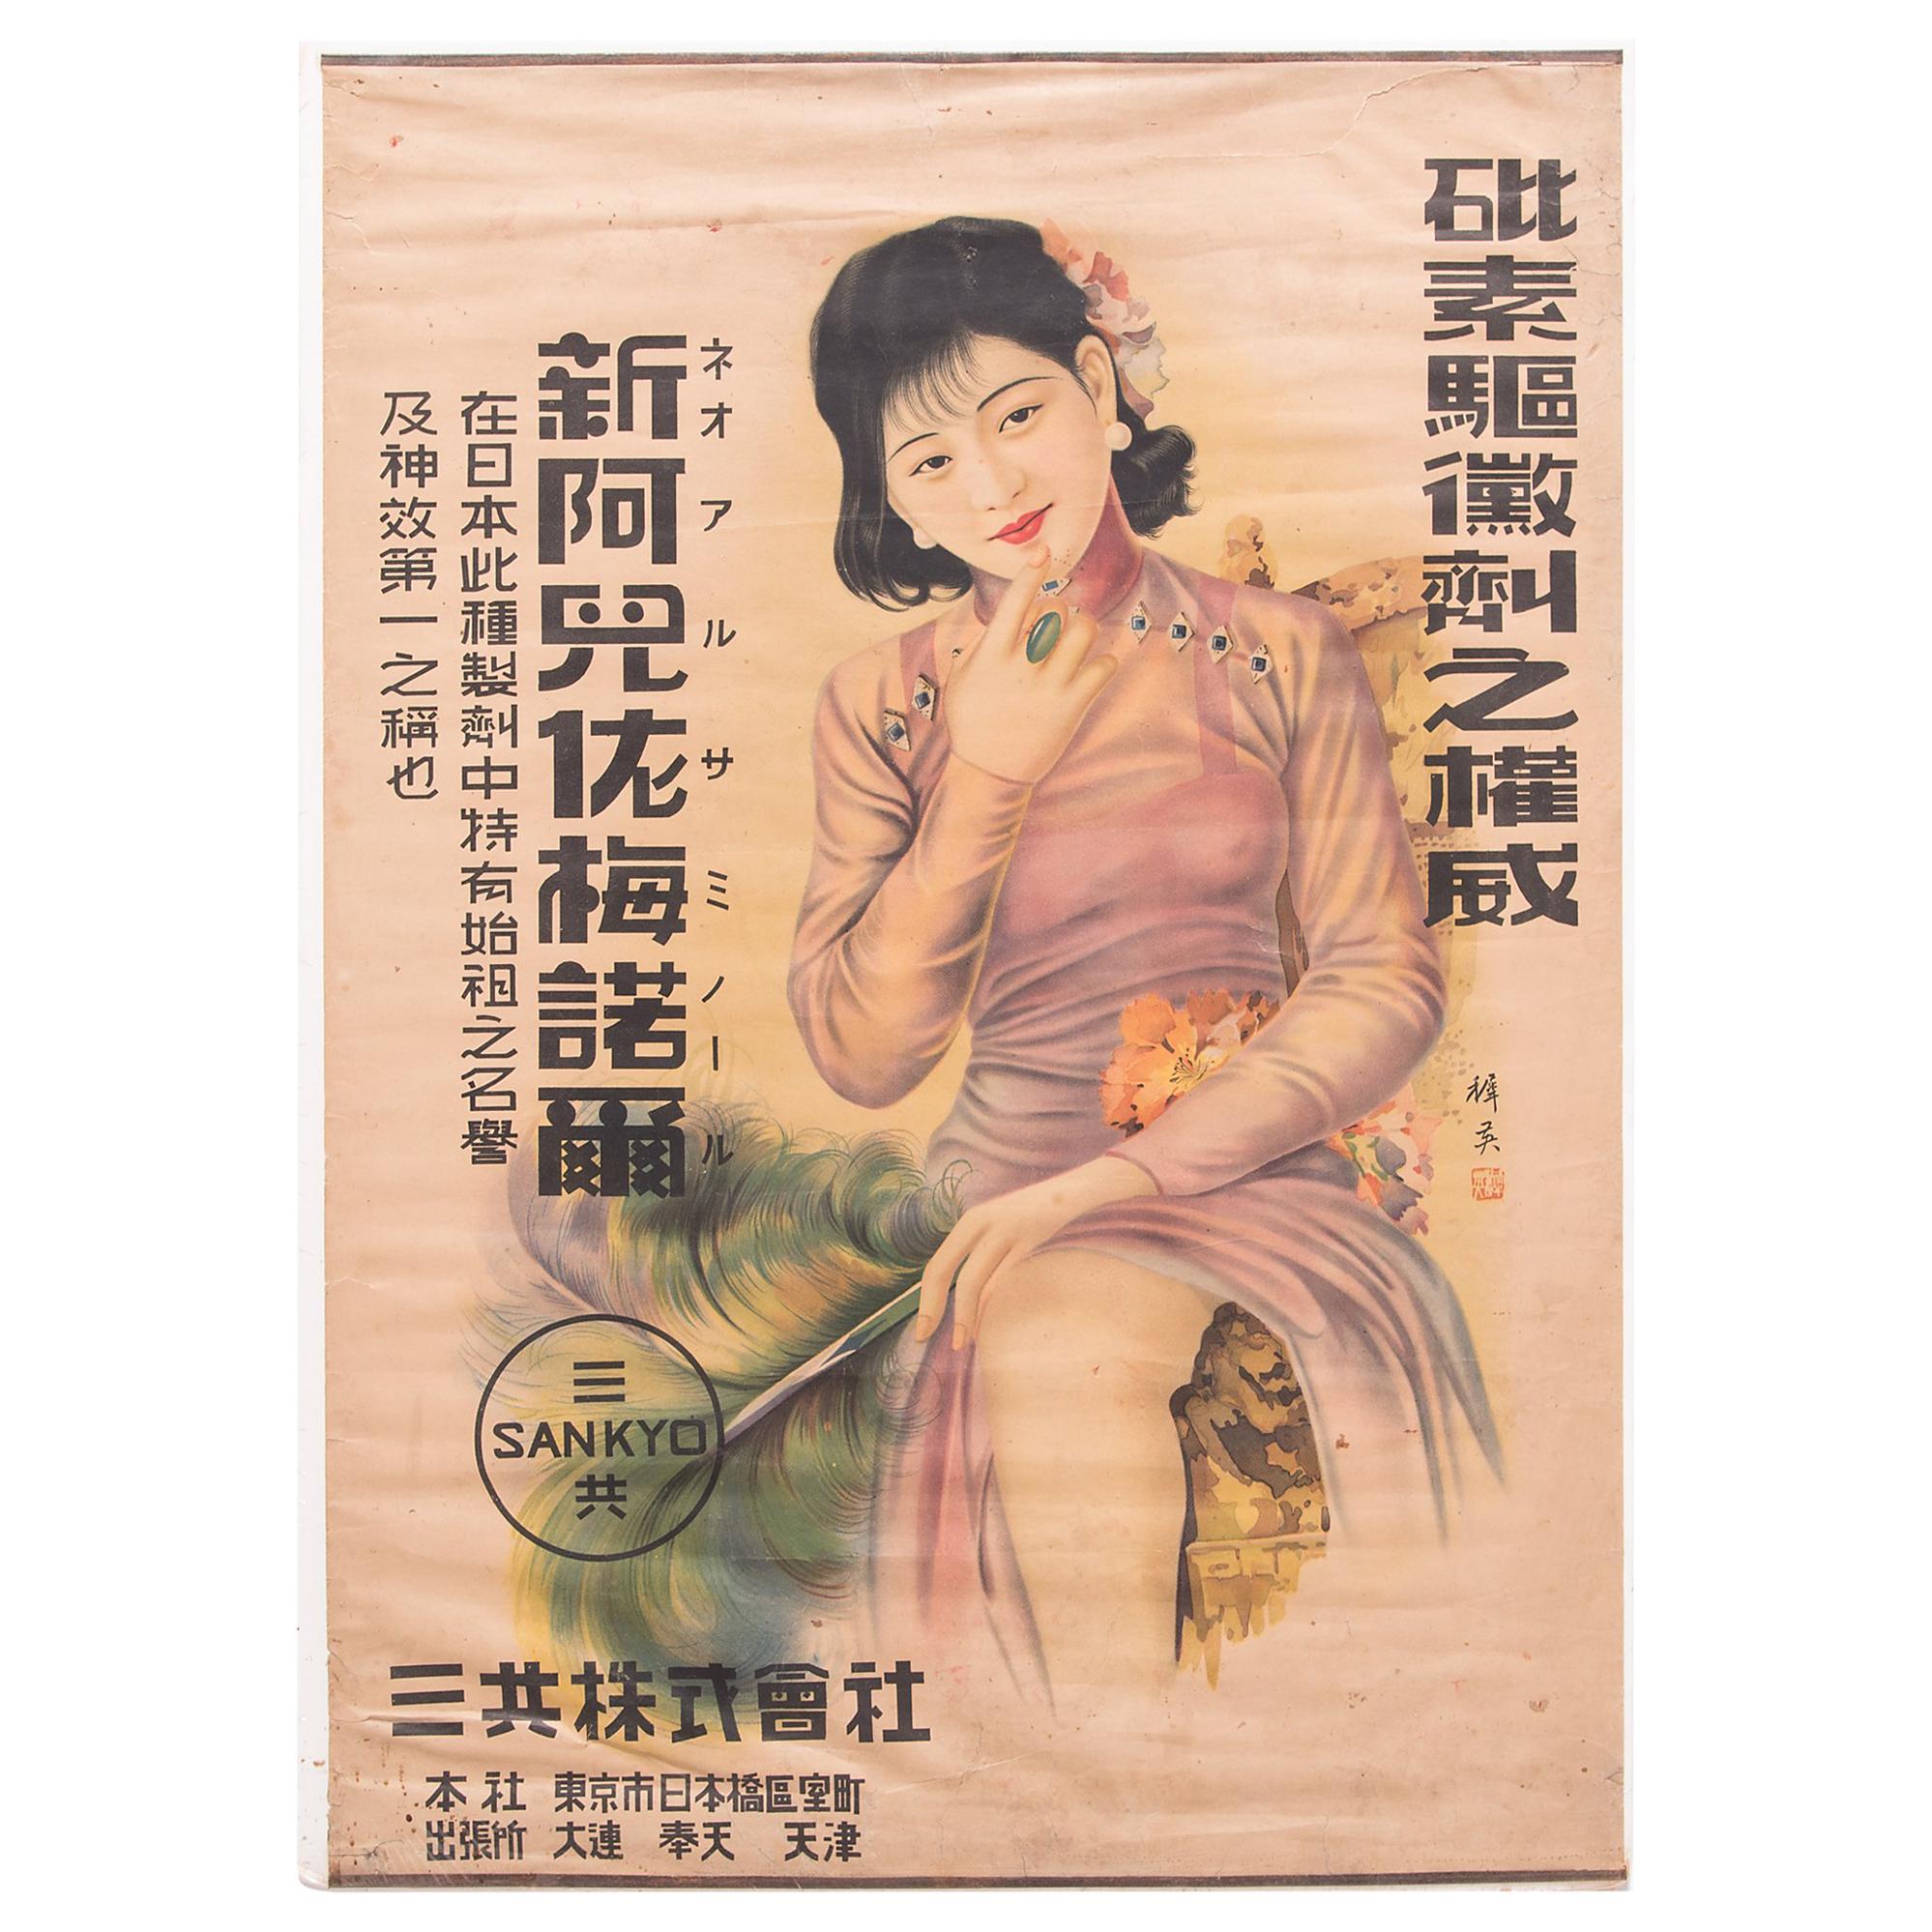 Vintage Sankyo Deco Advertisement Poster, c. 1930